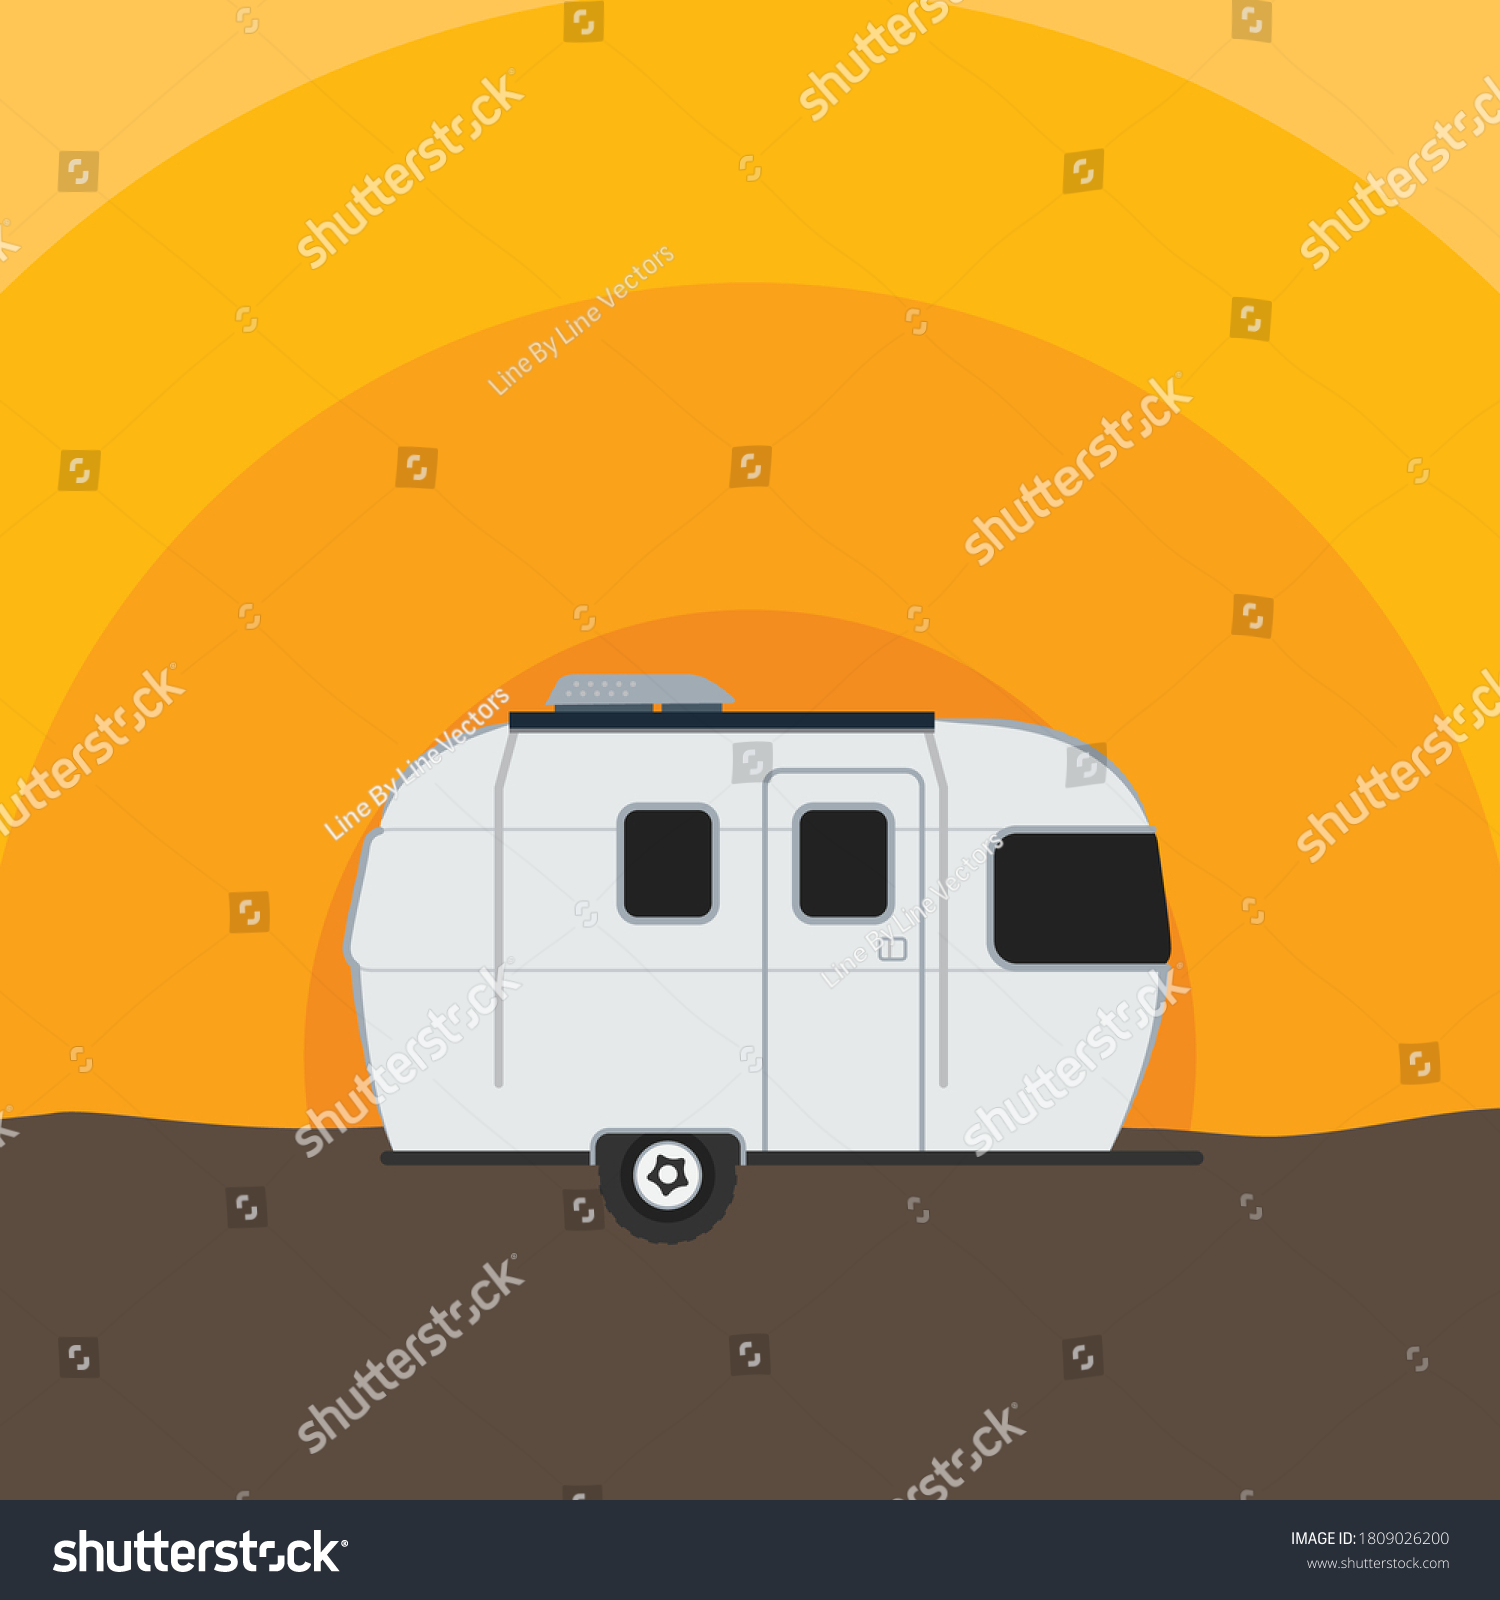 SVG of Travel Trailer, Camper Van, Motor Home, Airstream, Caravan Vector Illustration Background svg